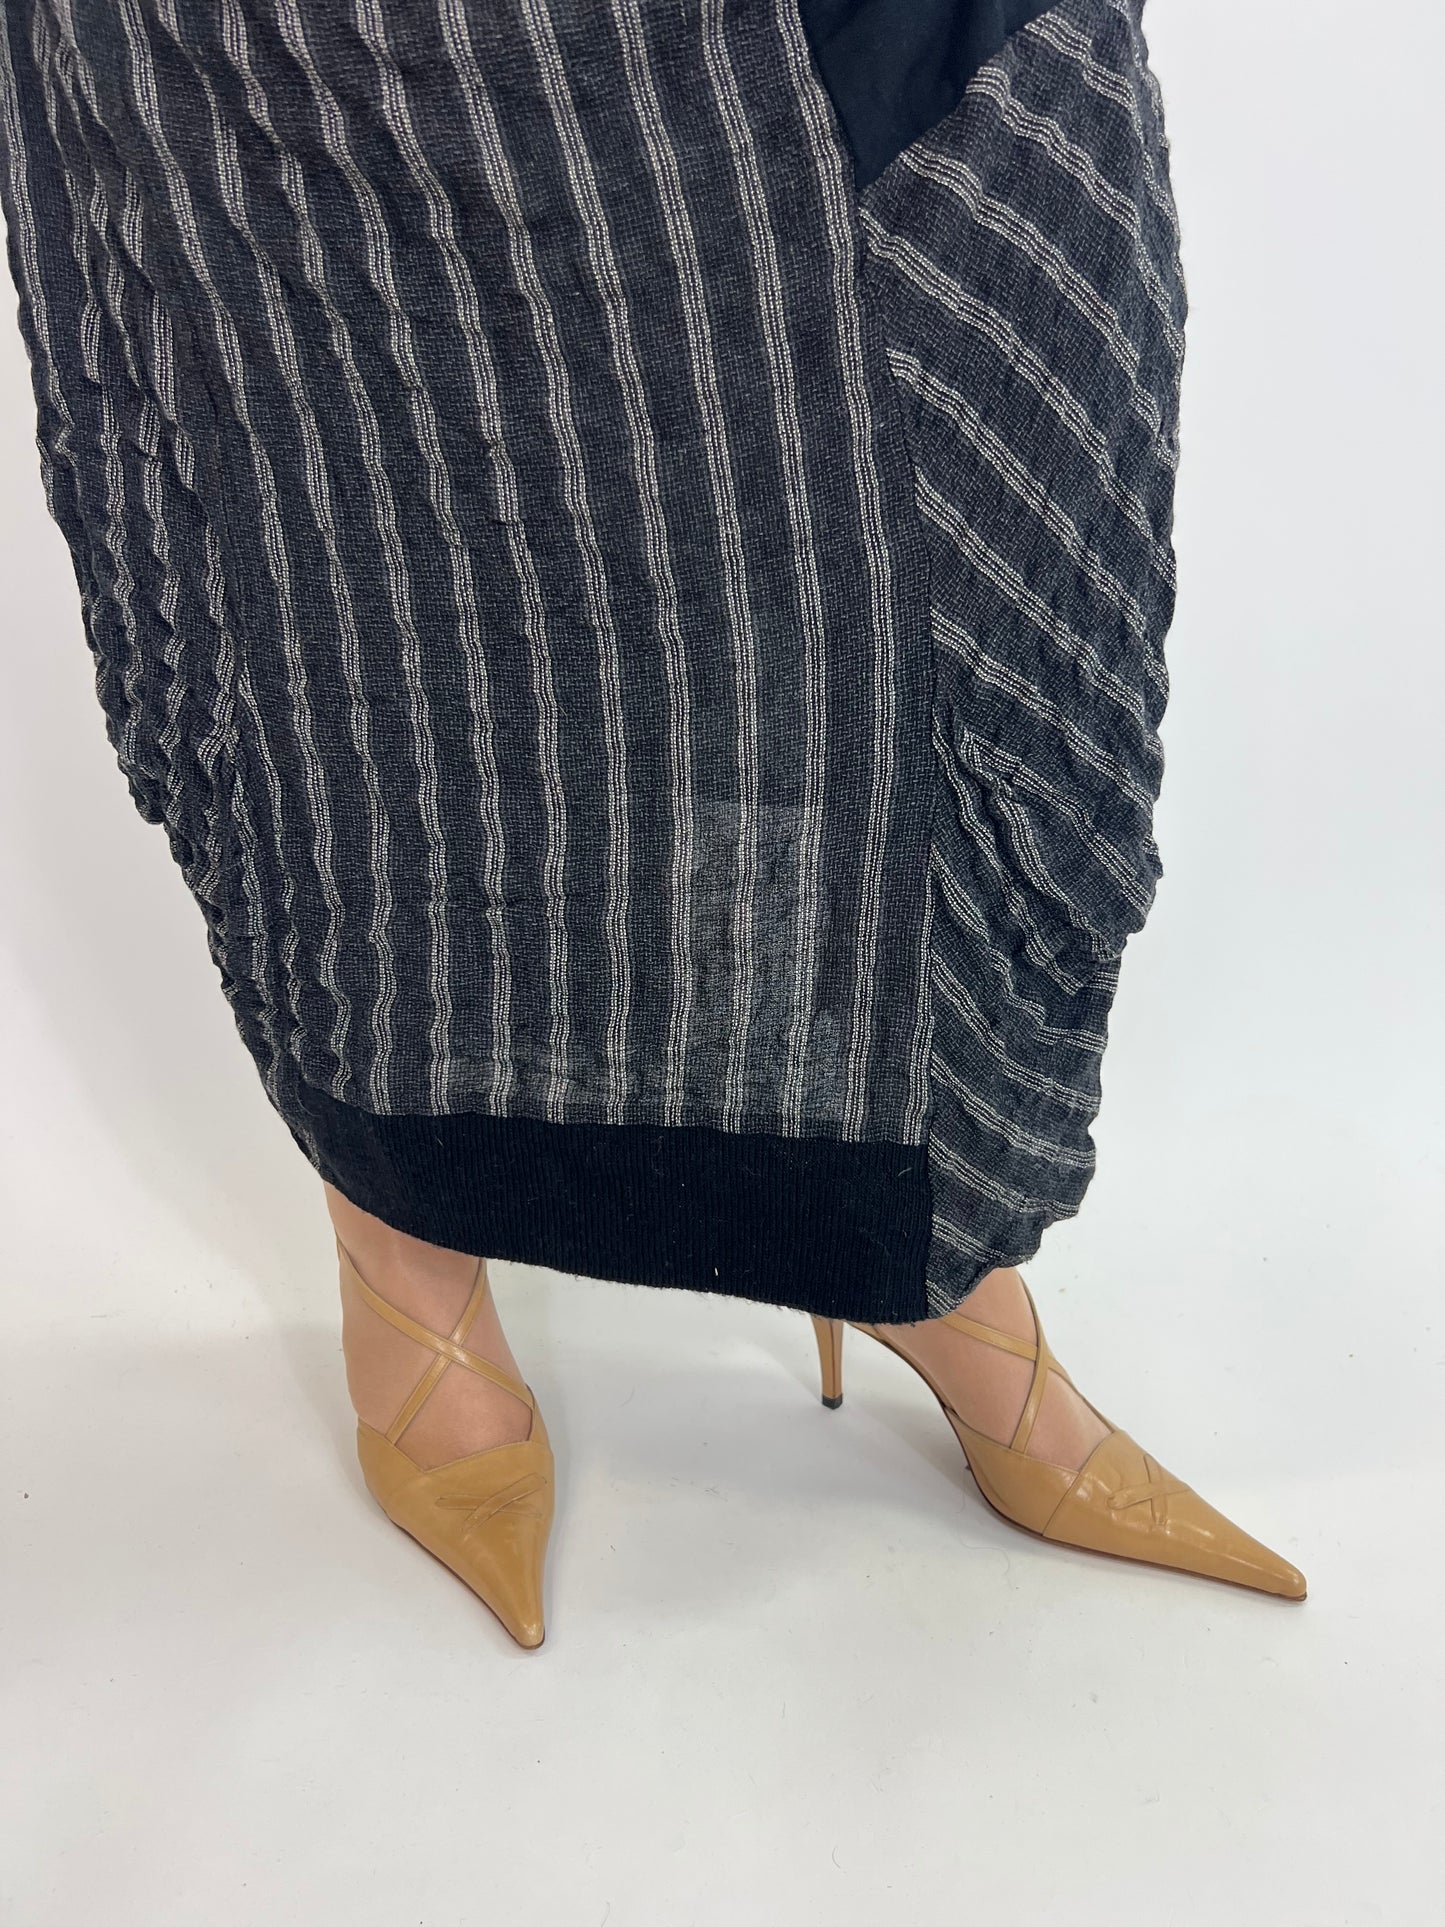 Grey/Black Pinstripe maxi Skirt with Pocket